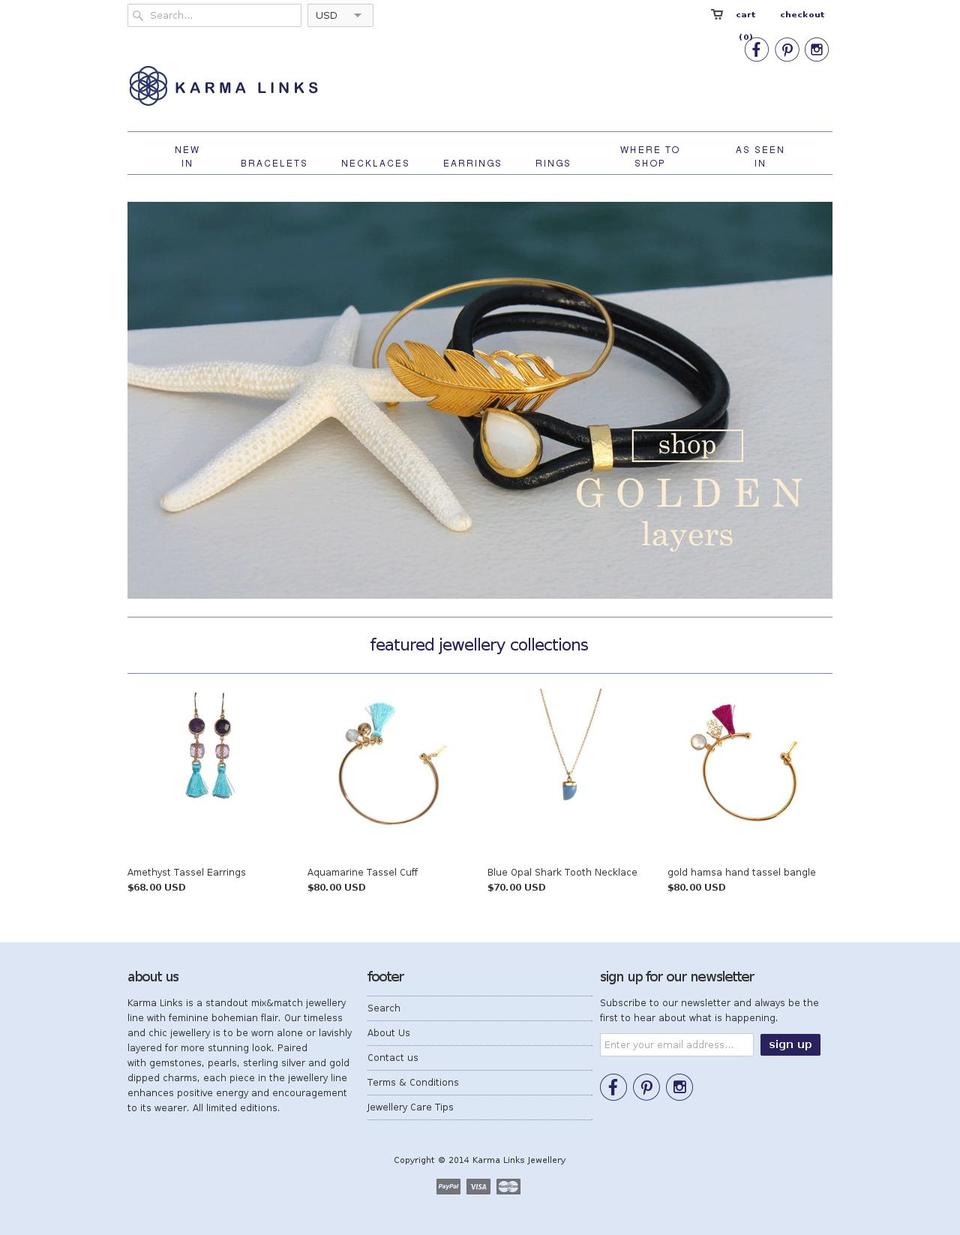 karmalinksjewellery.com shopify website screenshot